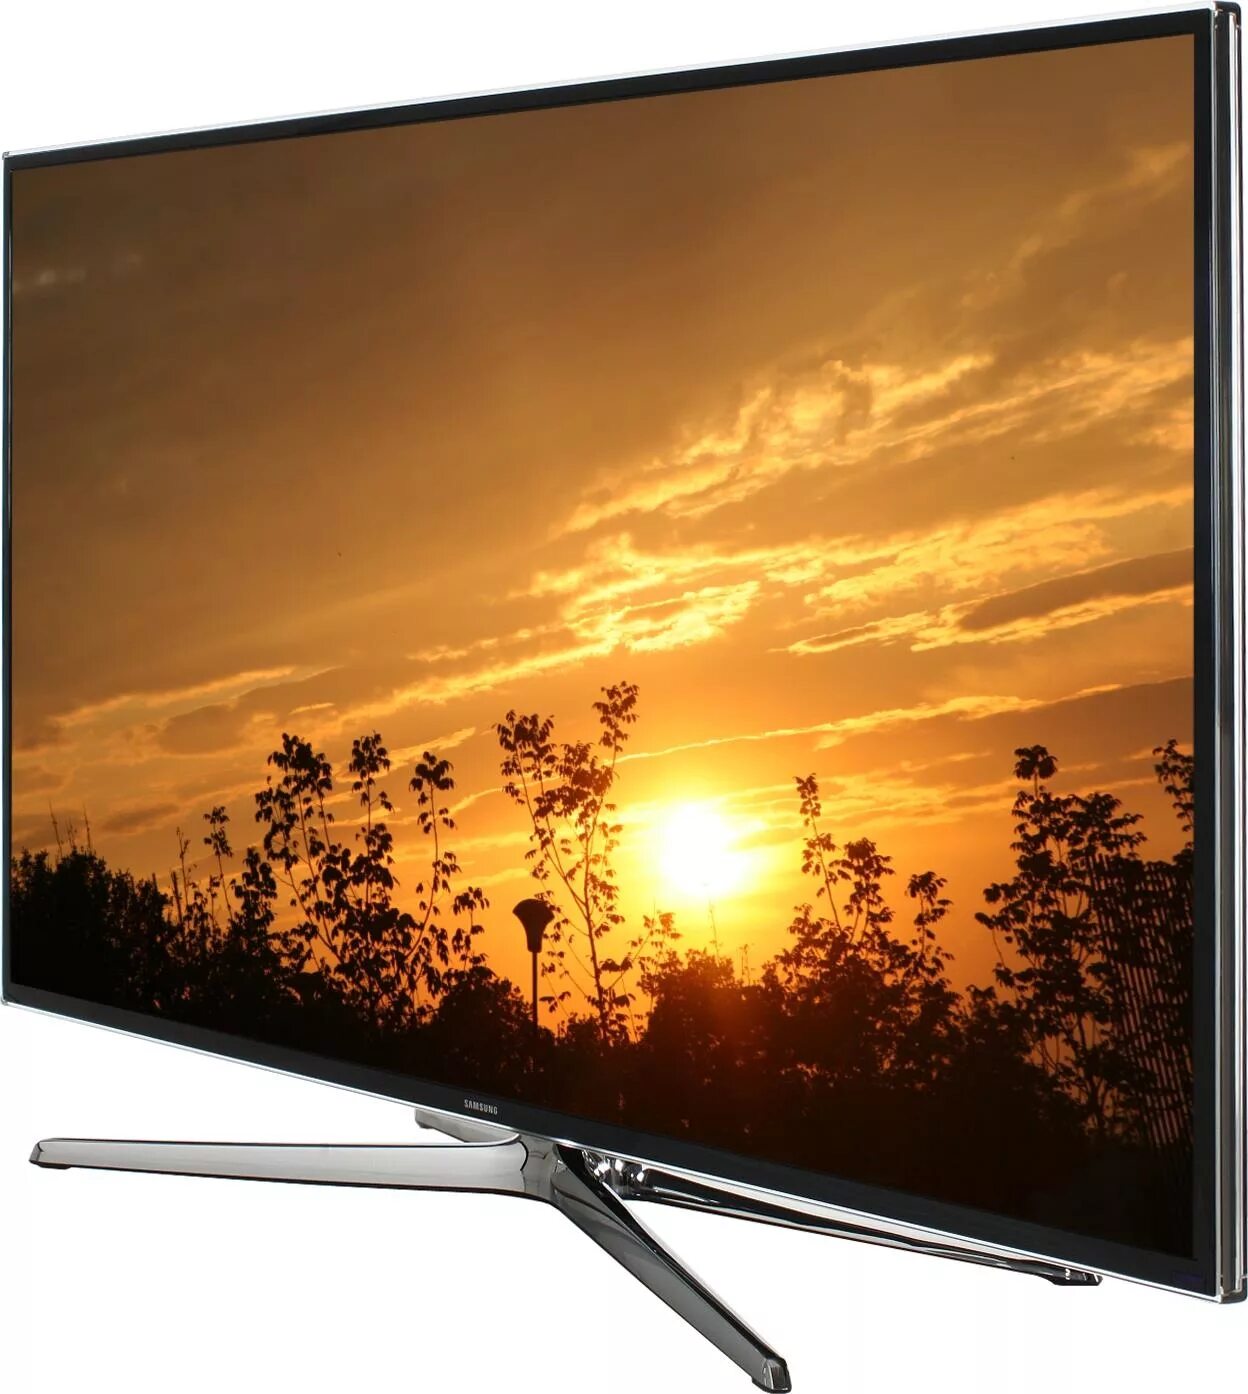 Samsung tv 32 дюймов. Samsung led 48 Smart TV. Samsung led 40 Smart TV 2014. Samsung led 40 Smart TV 2013. Телевизор Samsung ue48h6230.